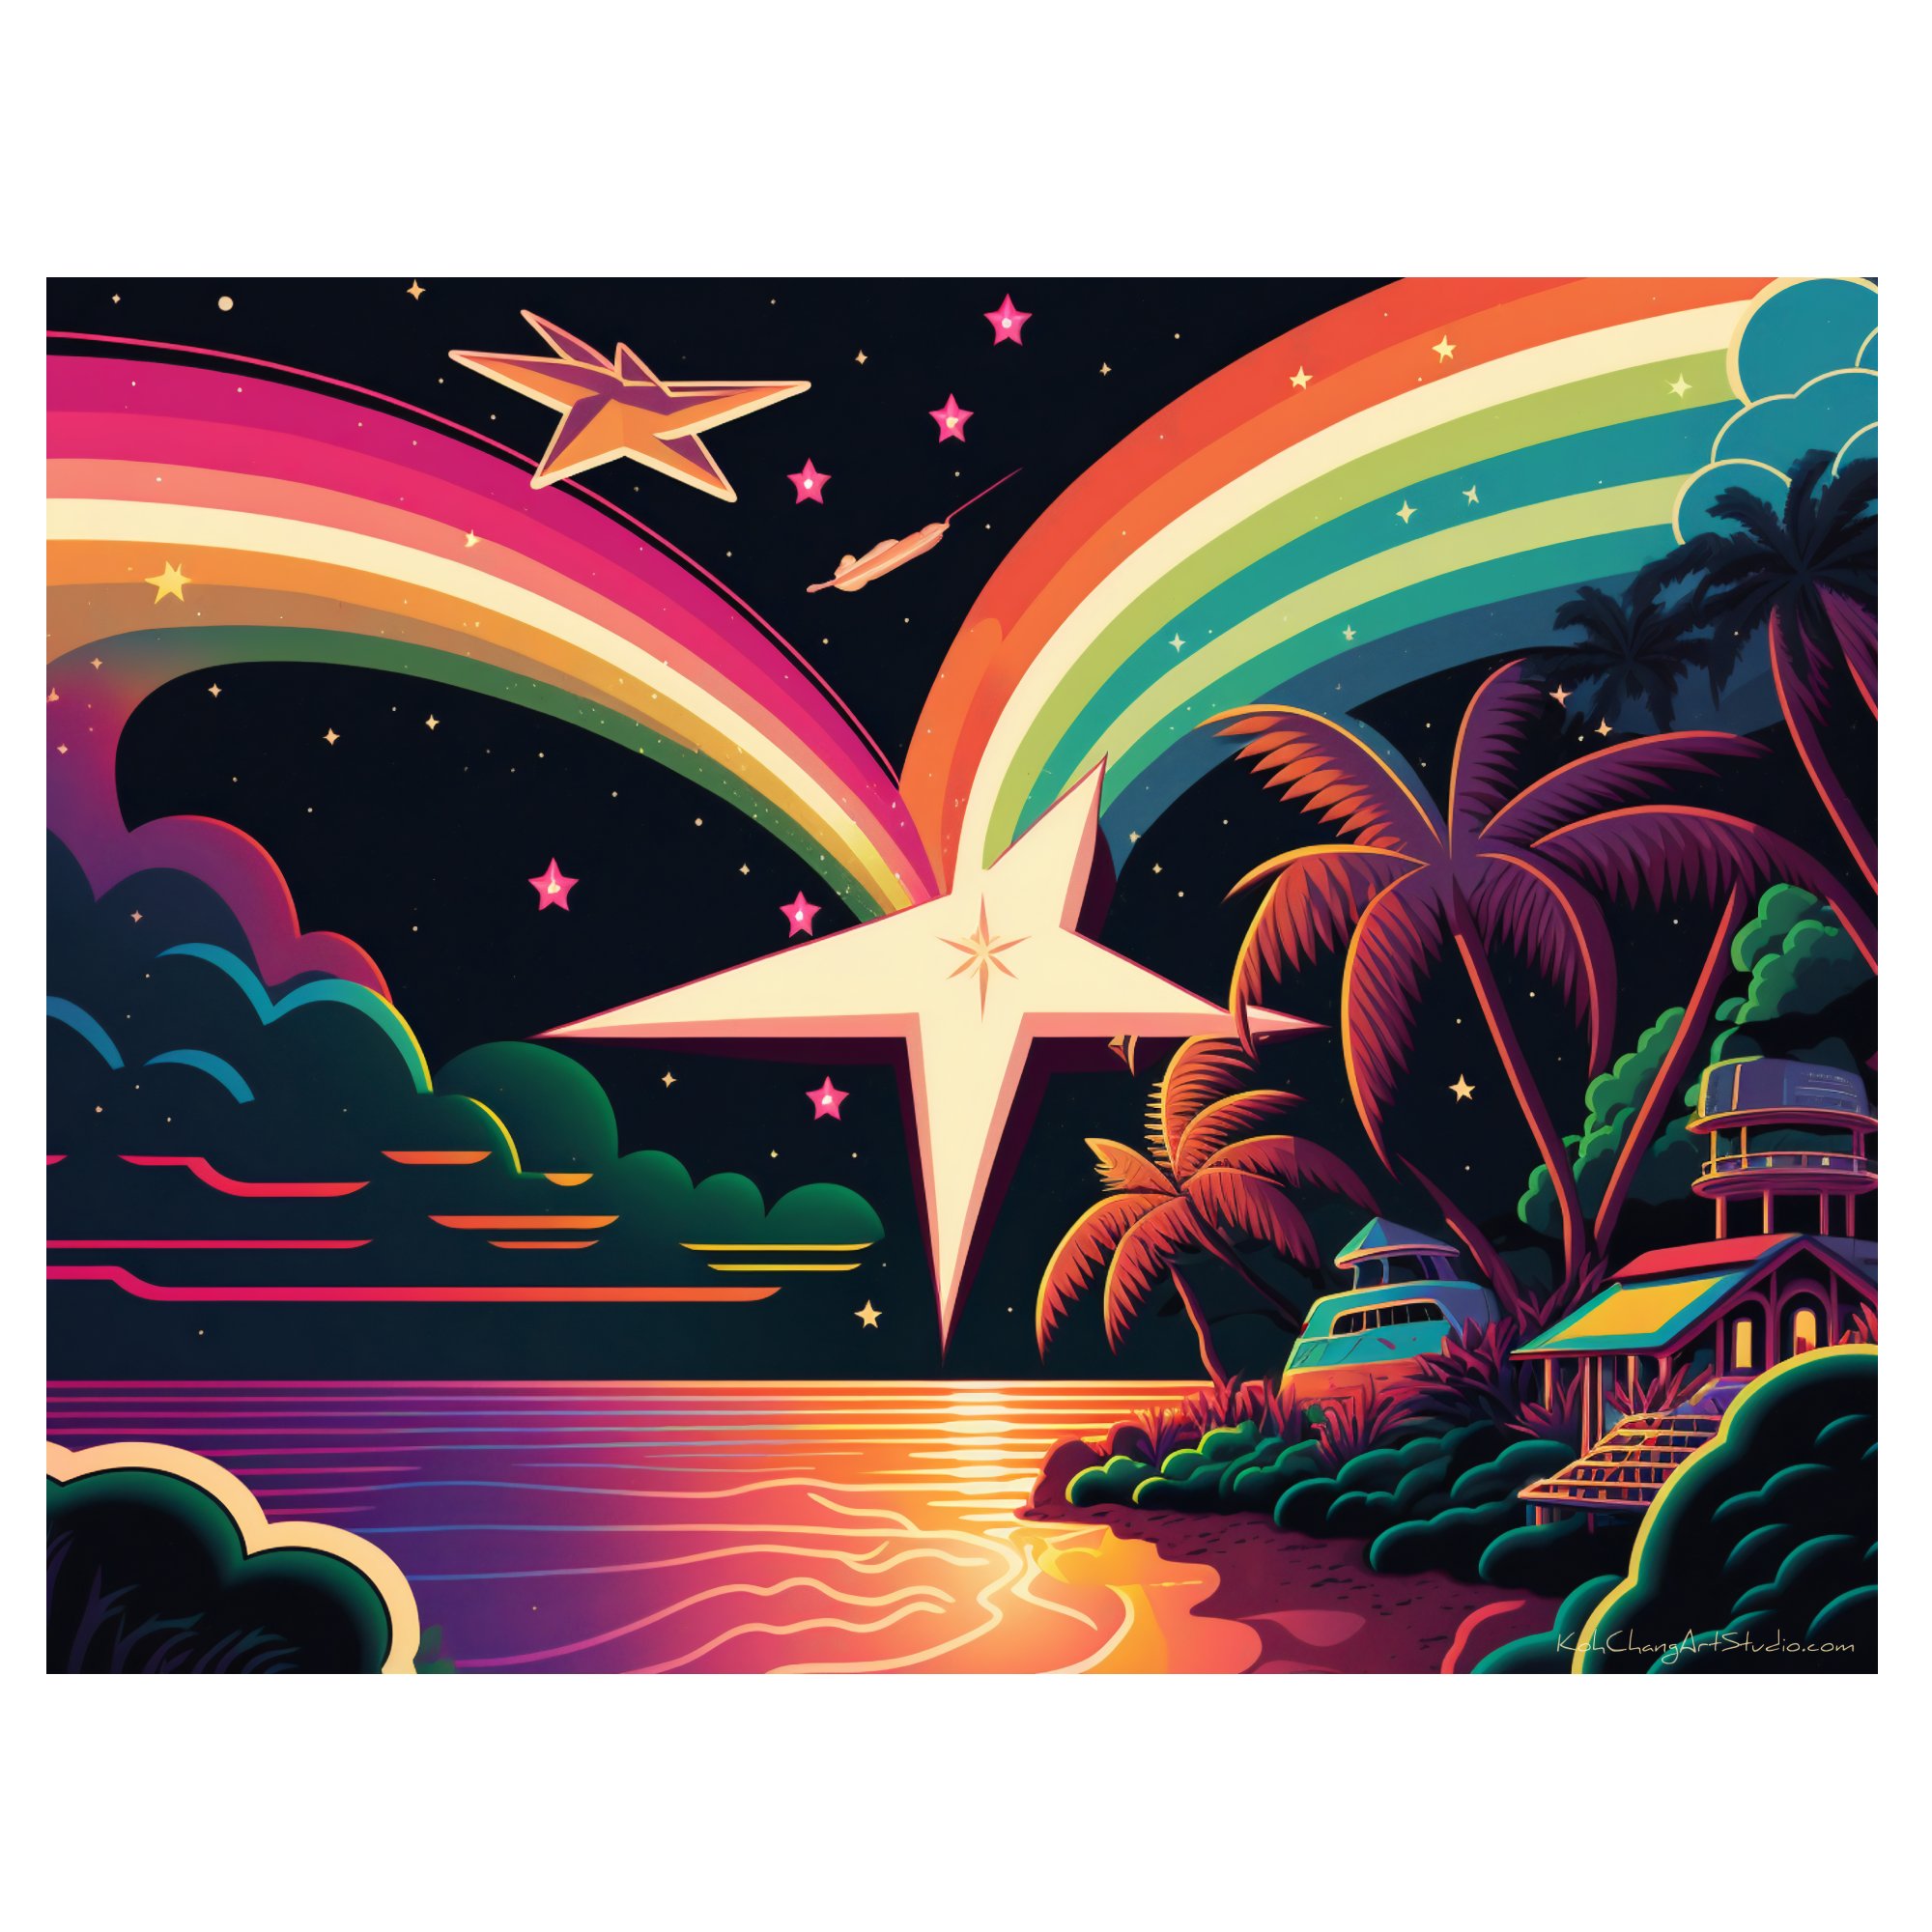 SKY BAZAAR Design - Giant star with twin rainbow trails over a placid sea, creating a celestial spectacle.